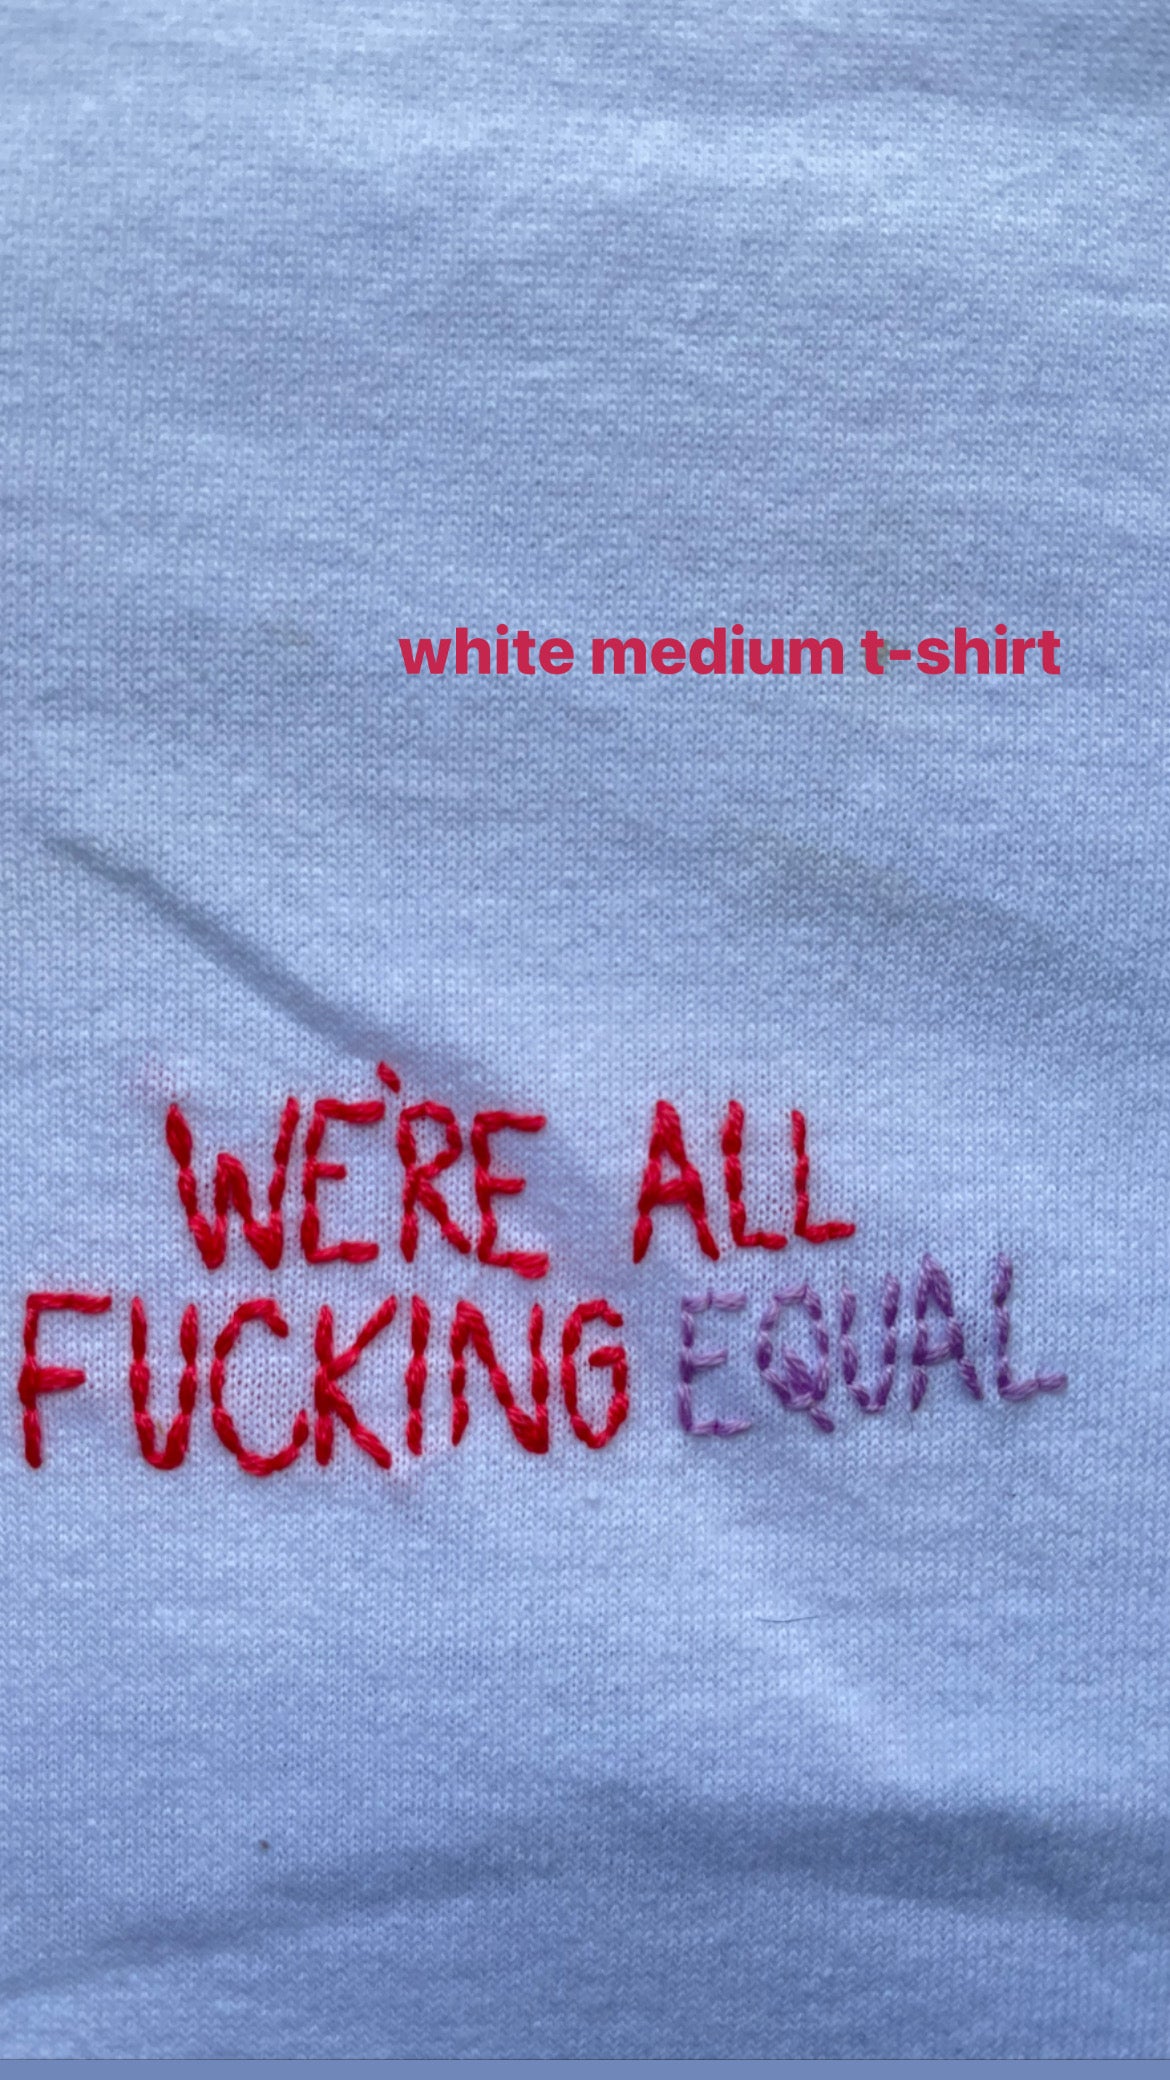 WE'RE ALL FUCKING EQUAL - WHITE MEDIUM